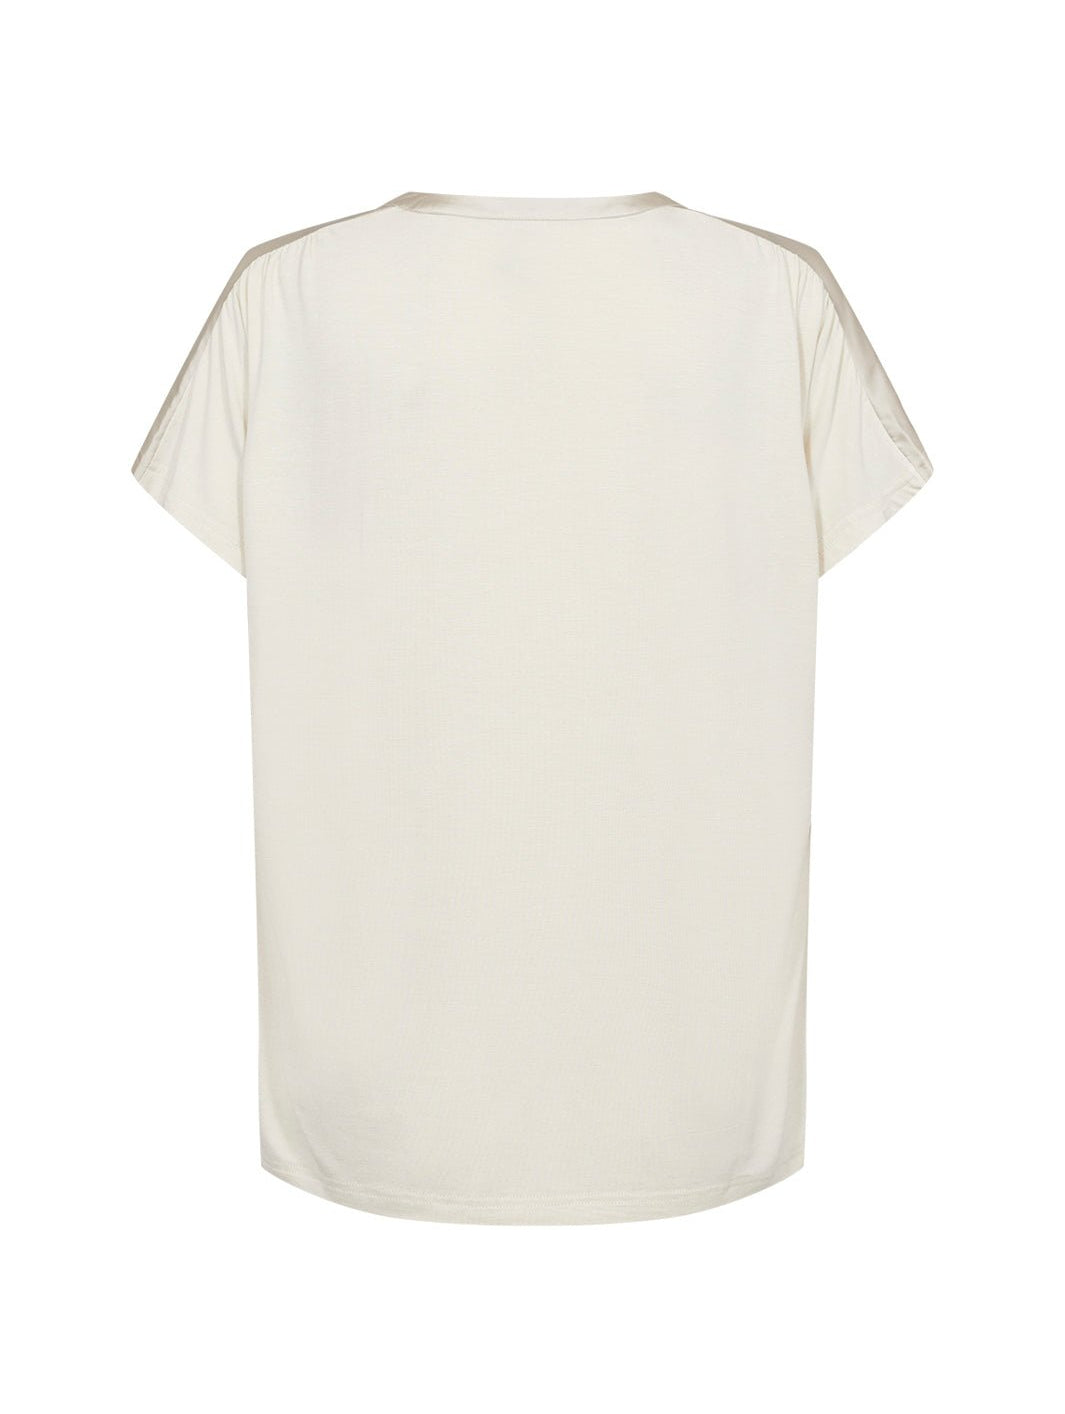 Soya Concept Thilde 49 t-shirt cream - Online-Mode